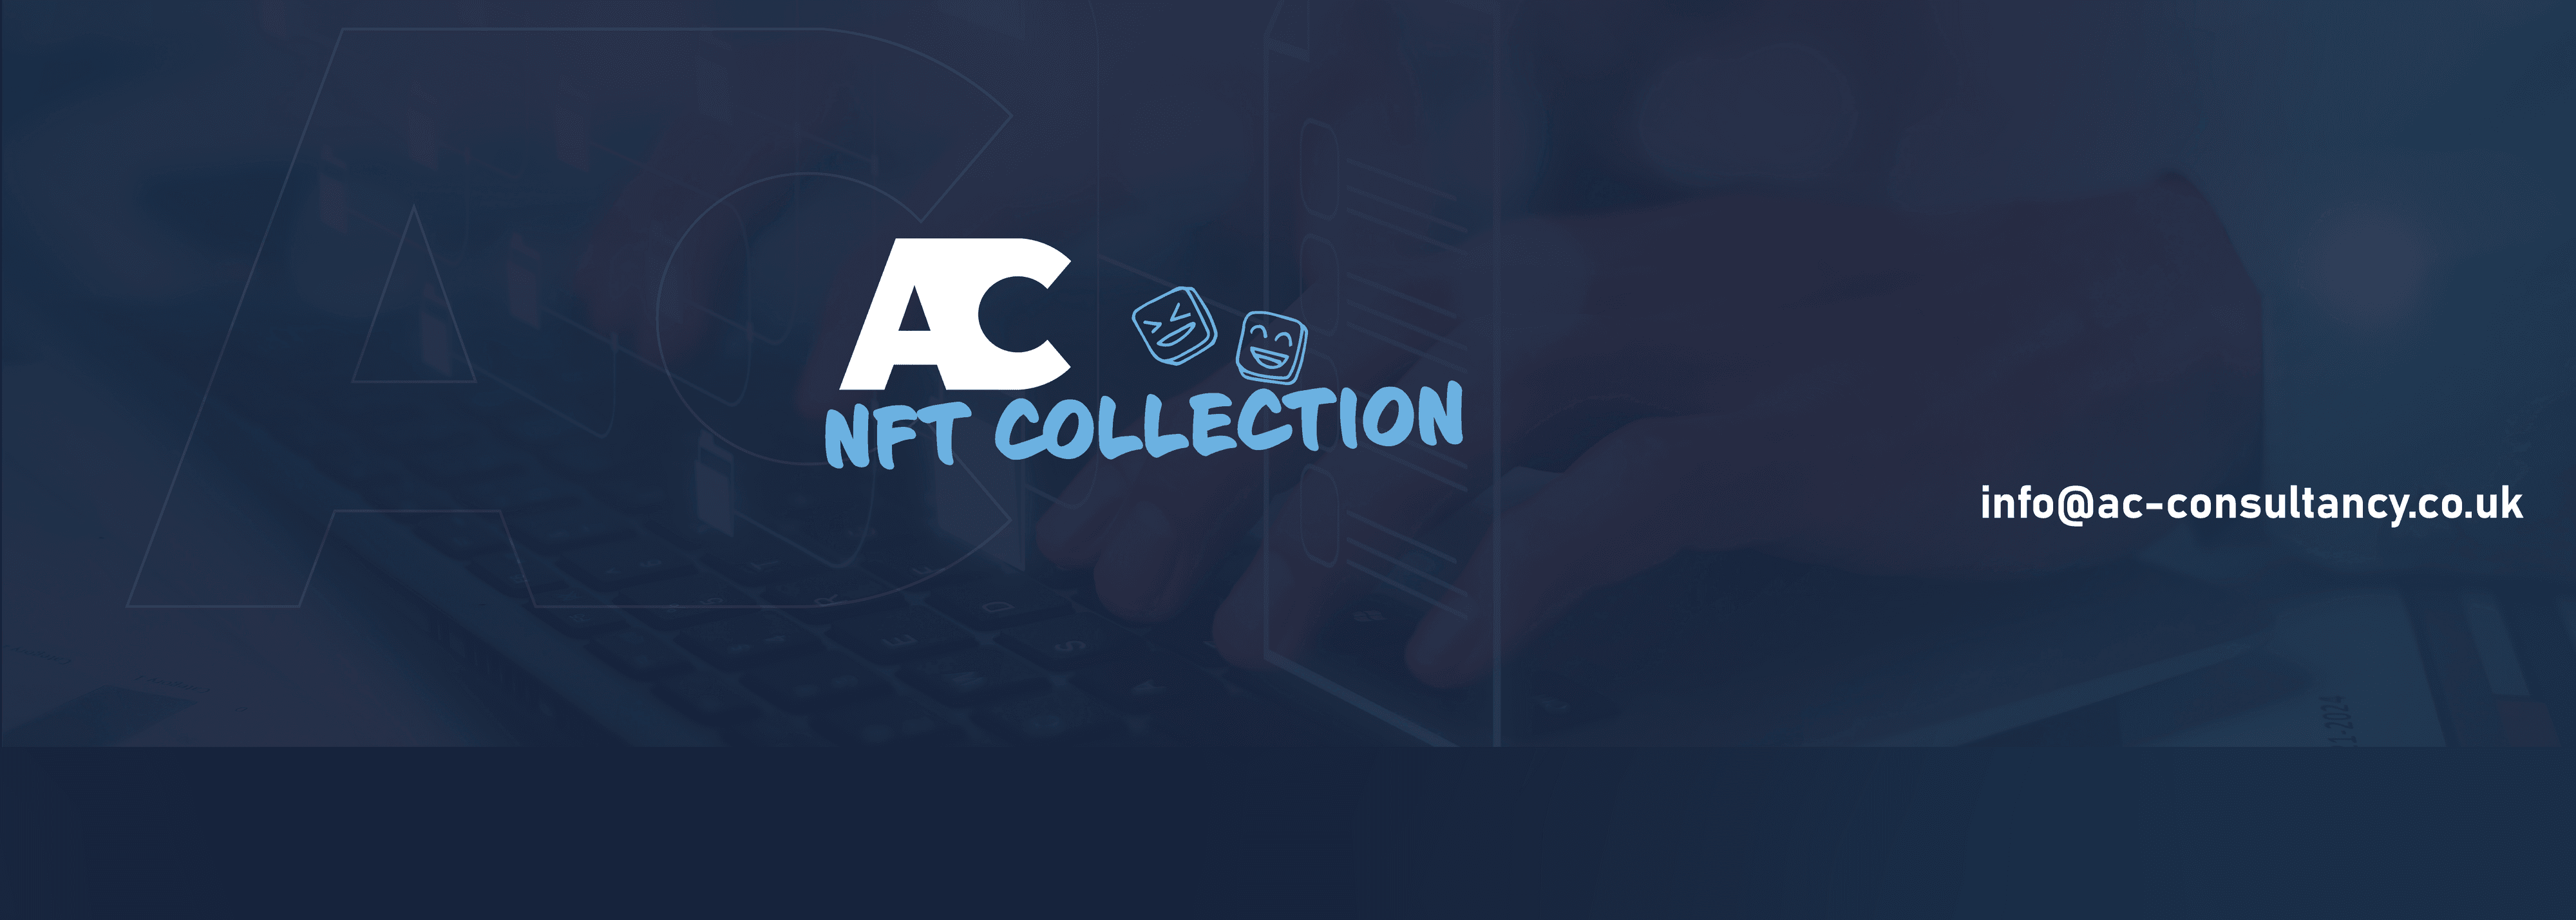 AC_Collection 横幅